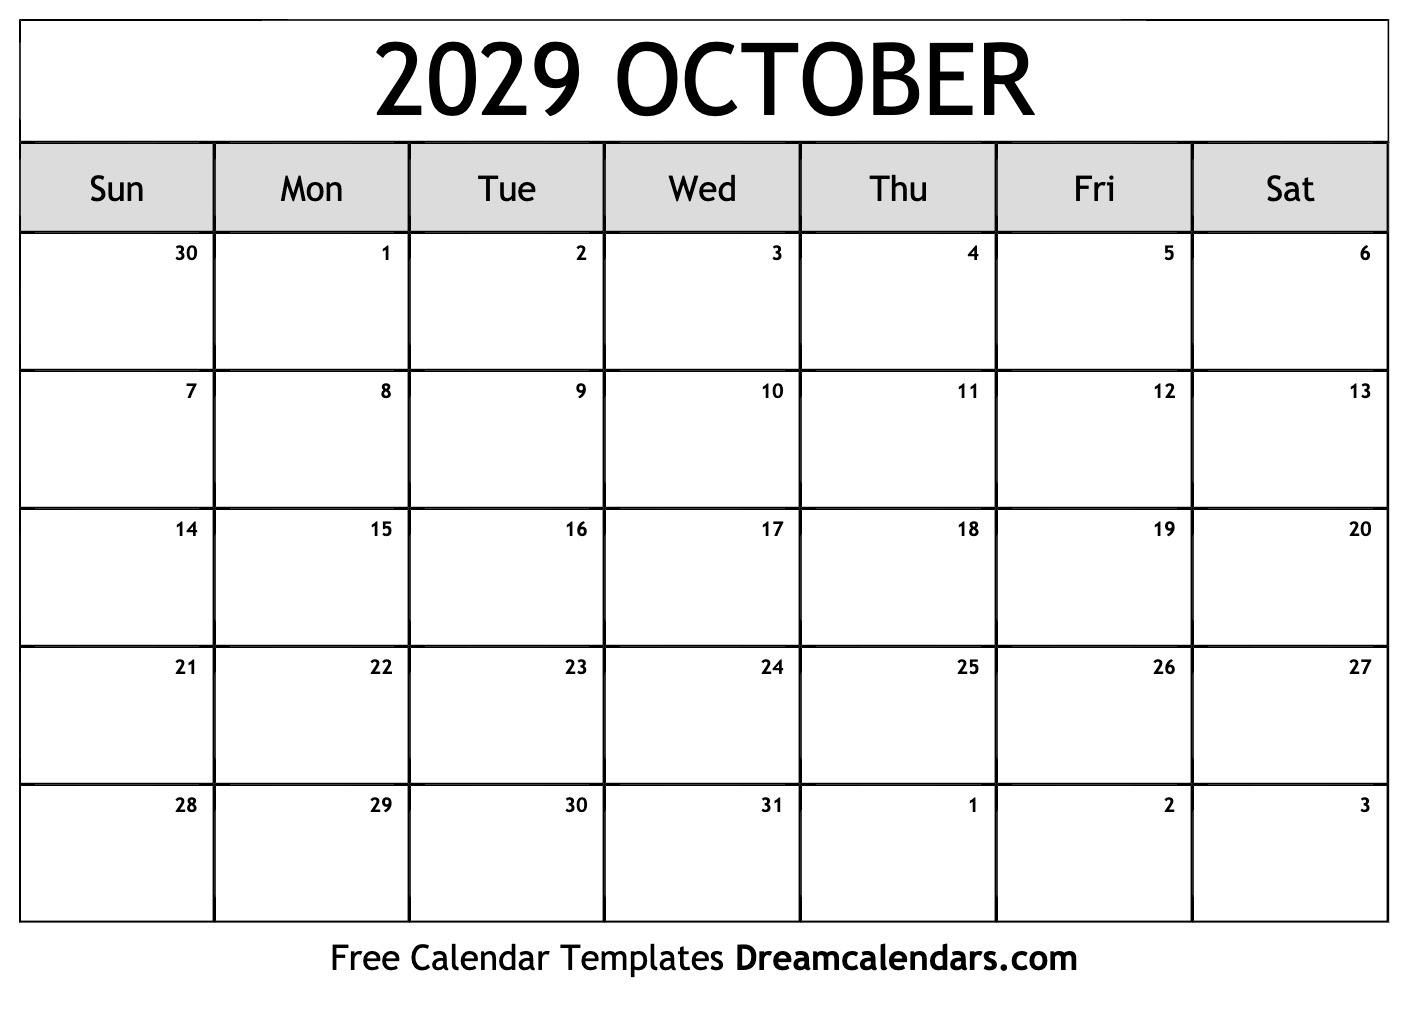 download-printable-october-2029-calendars